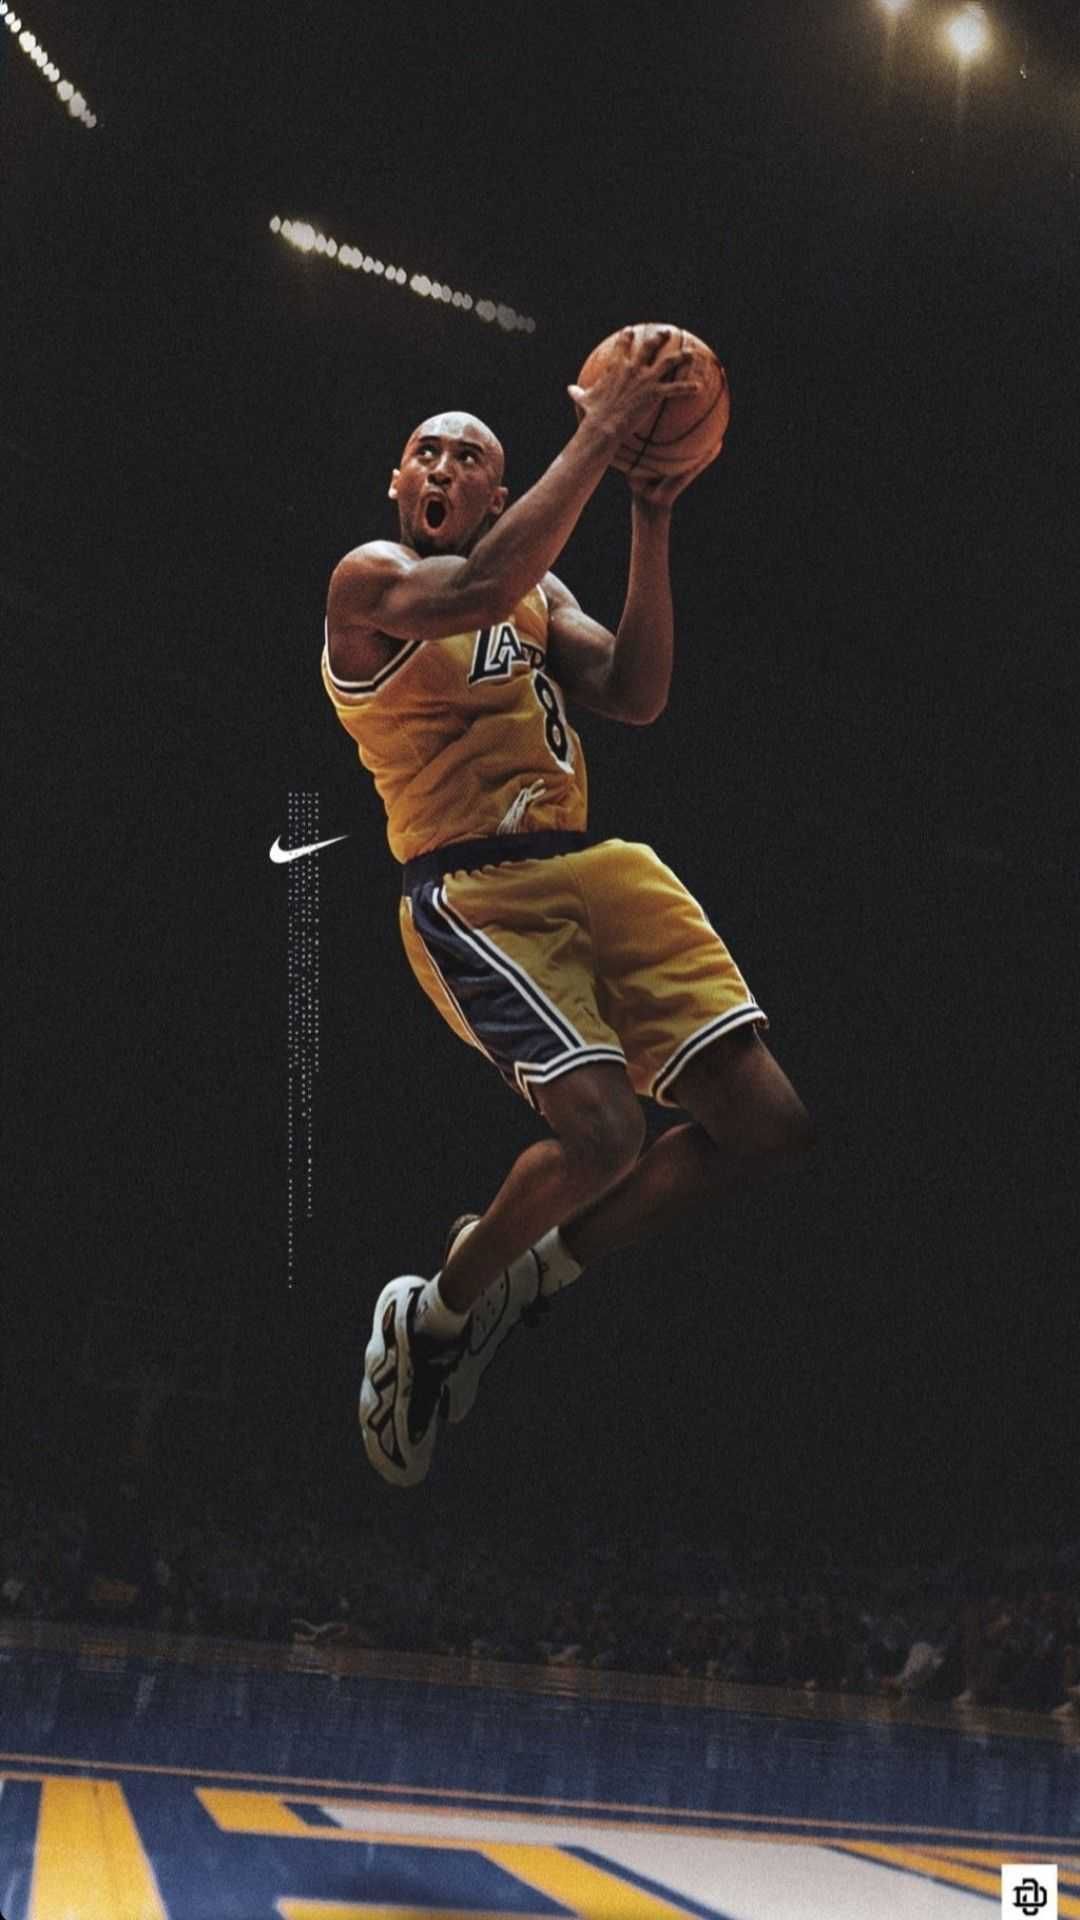 Kobe Bryant Wallpaper Discover more background, Basketball, cool, desktop, iphone wallpap. Kobe bryant wallpaper, Kobe bryant picture, Kobe bryant michael jordan